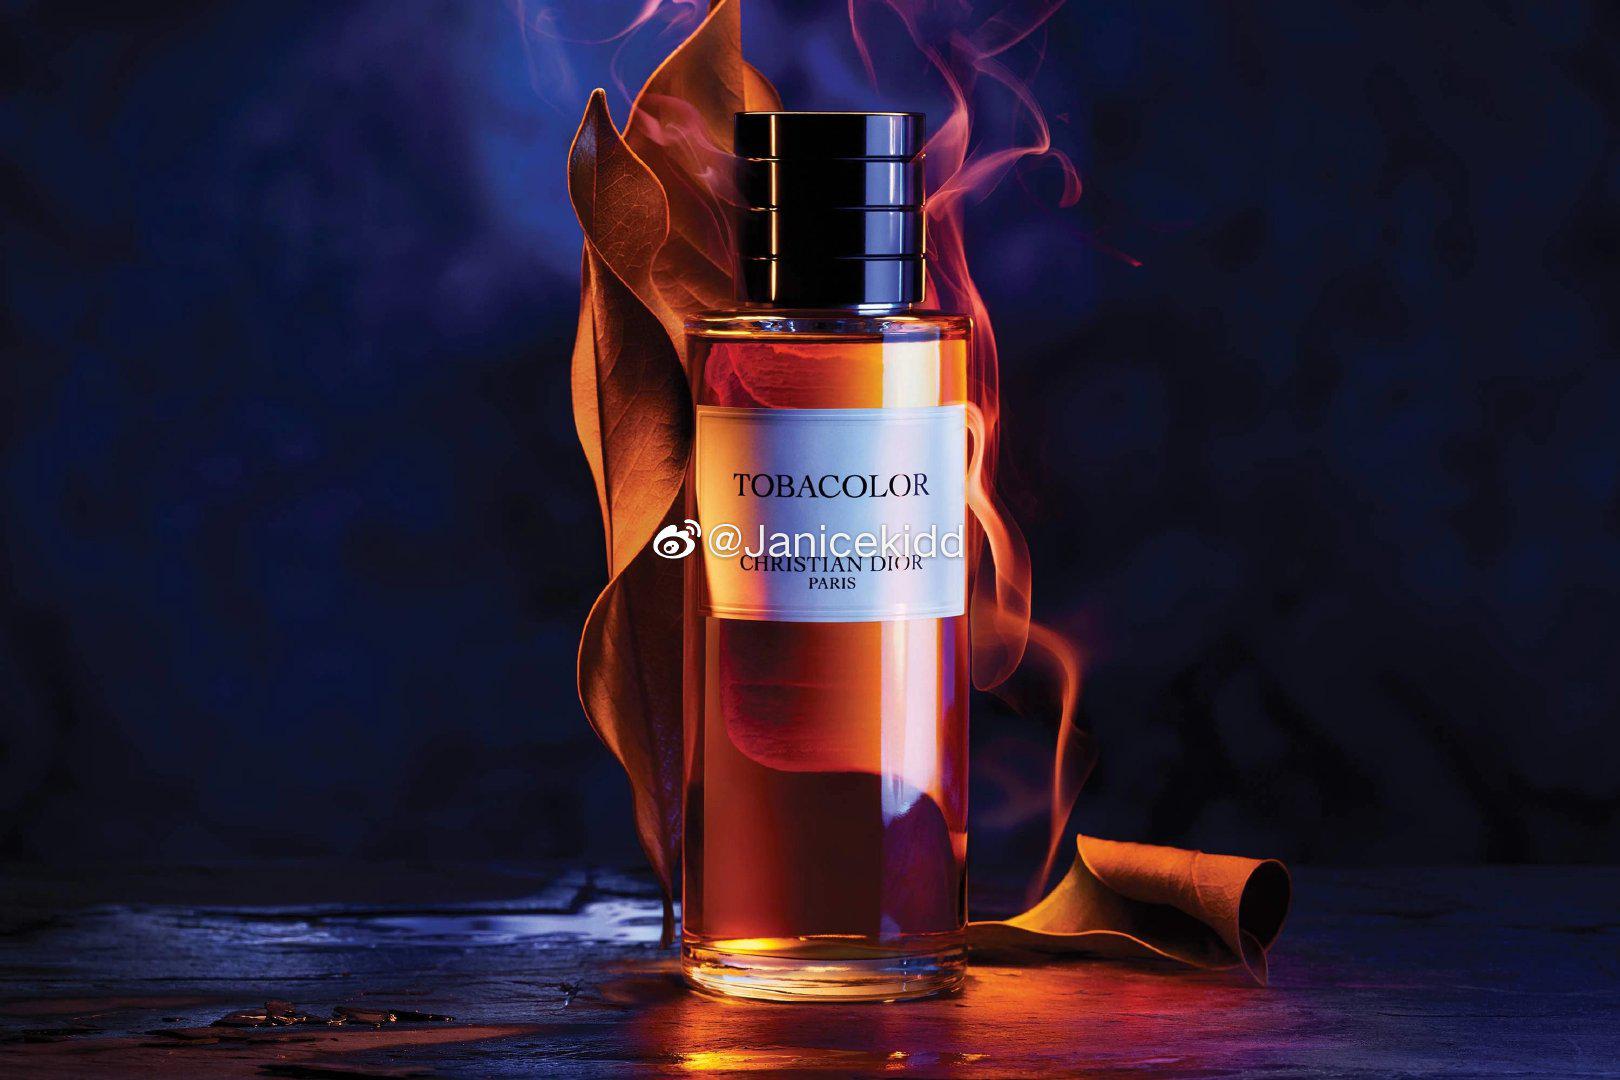 Christian Dior 高定香水系列新香Tobacolor 2月发售……|高定|烟草|香水系列_新浪新闻